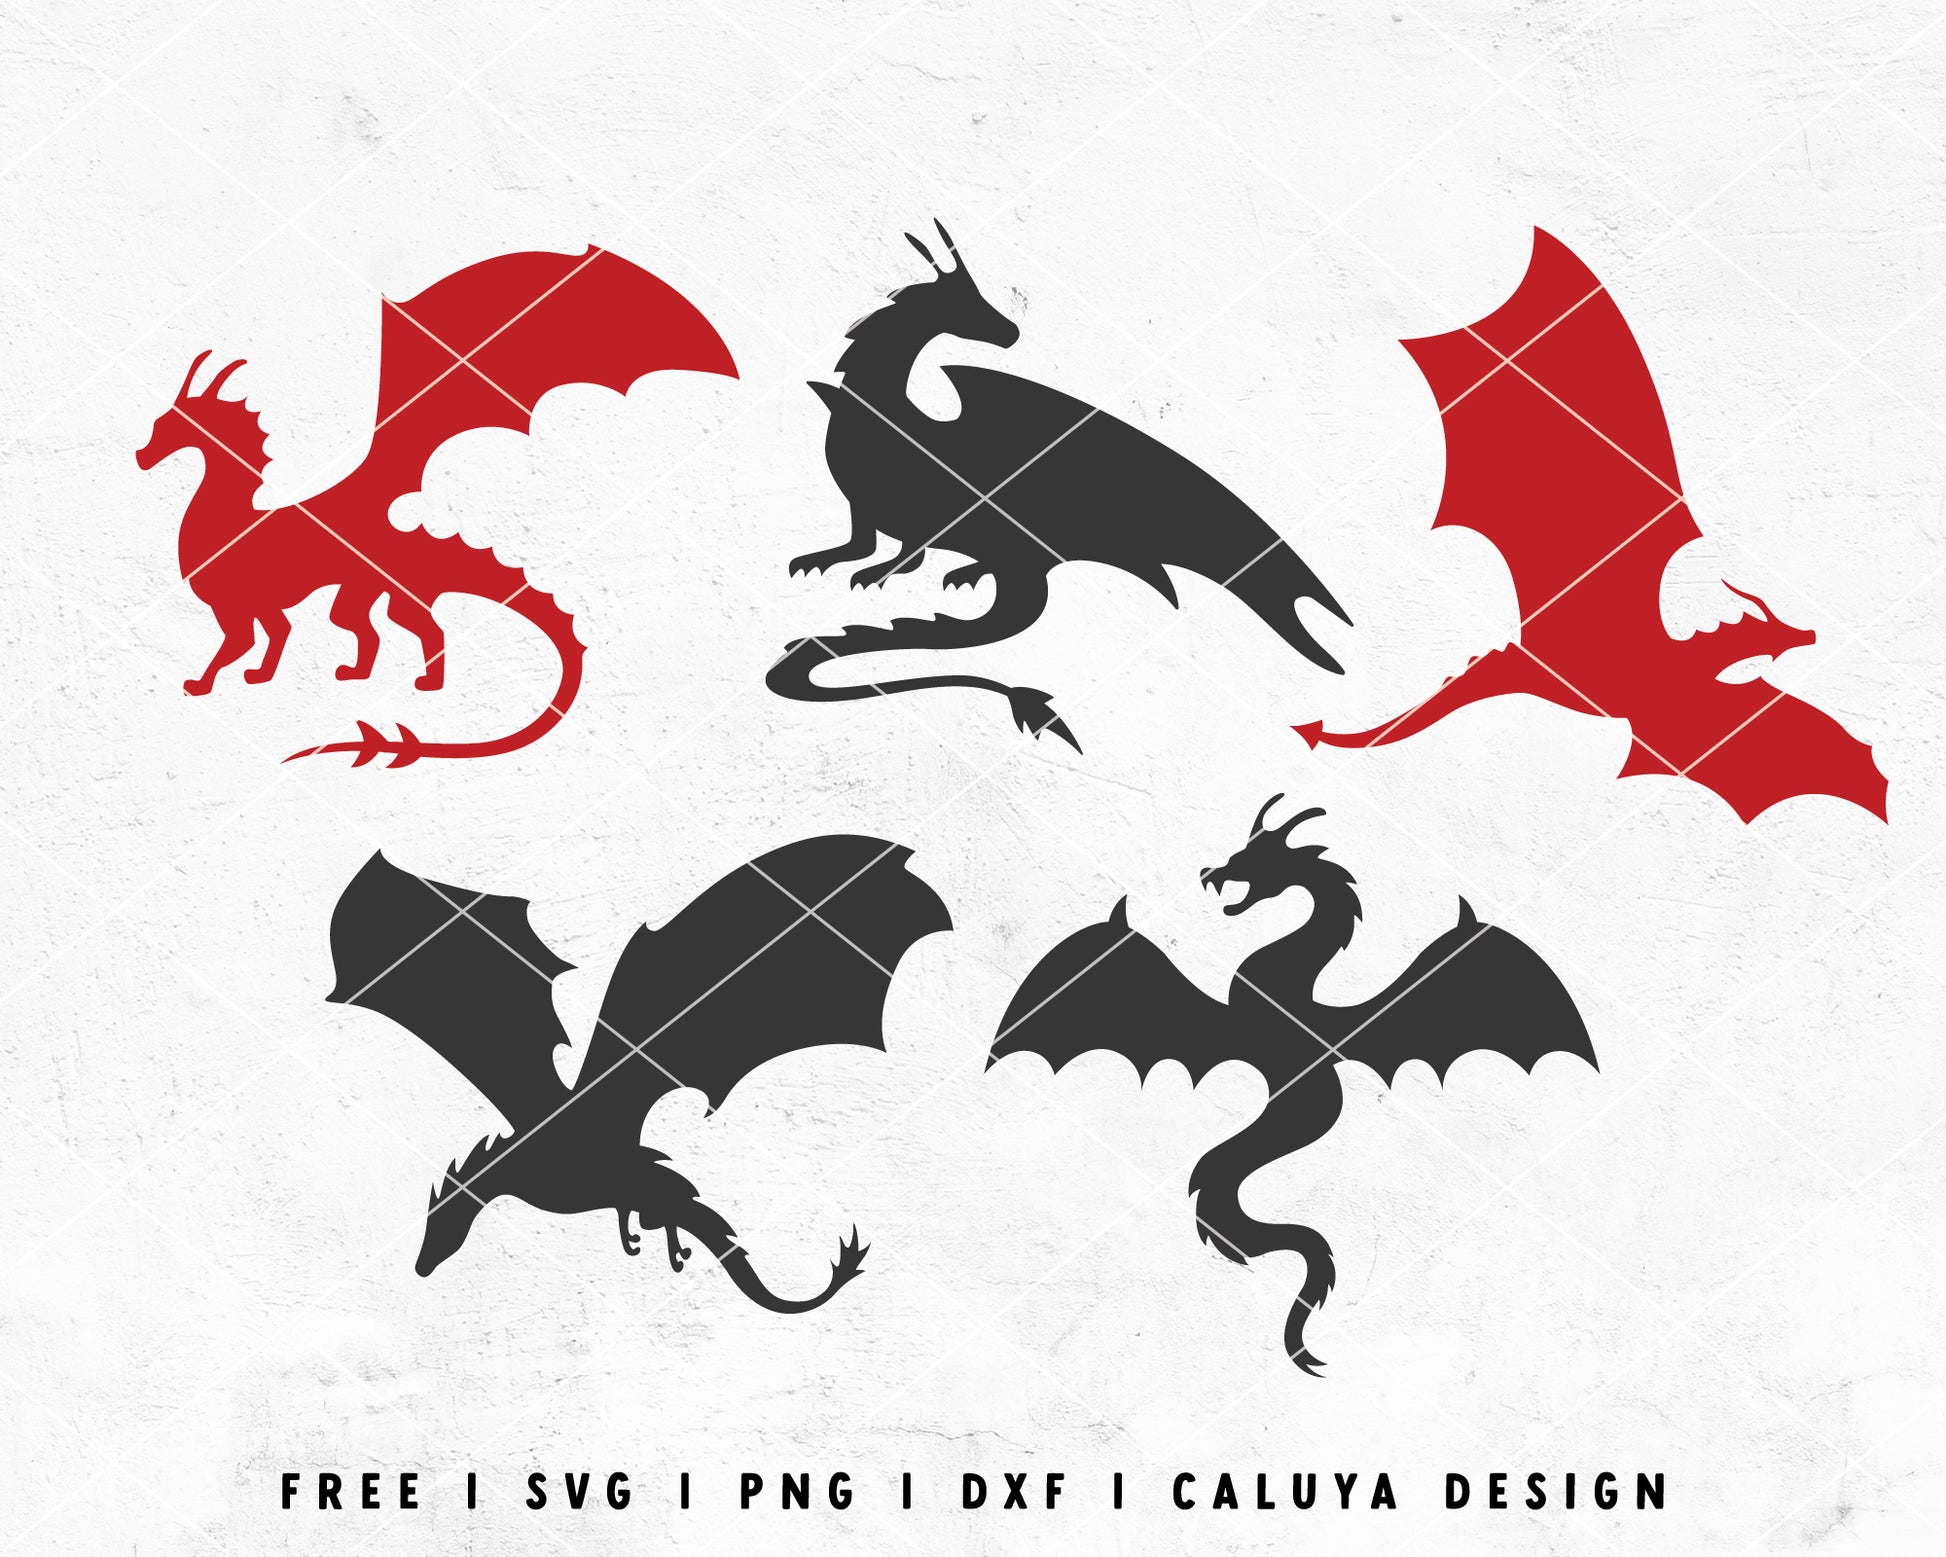 FREE Dragon SVG | Kids School SVG Cut File for Cricut, Cameo Silhouette | Free SVG Cut File